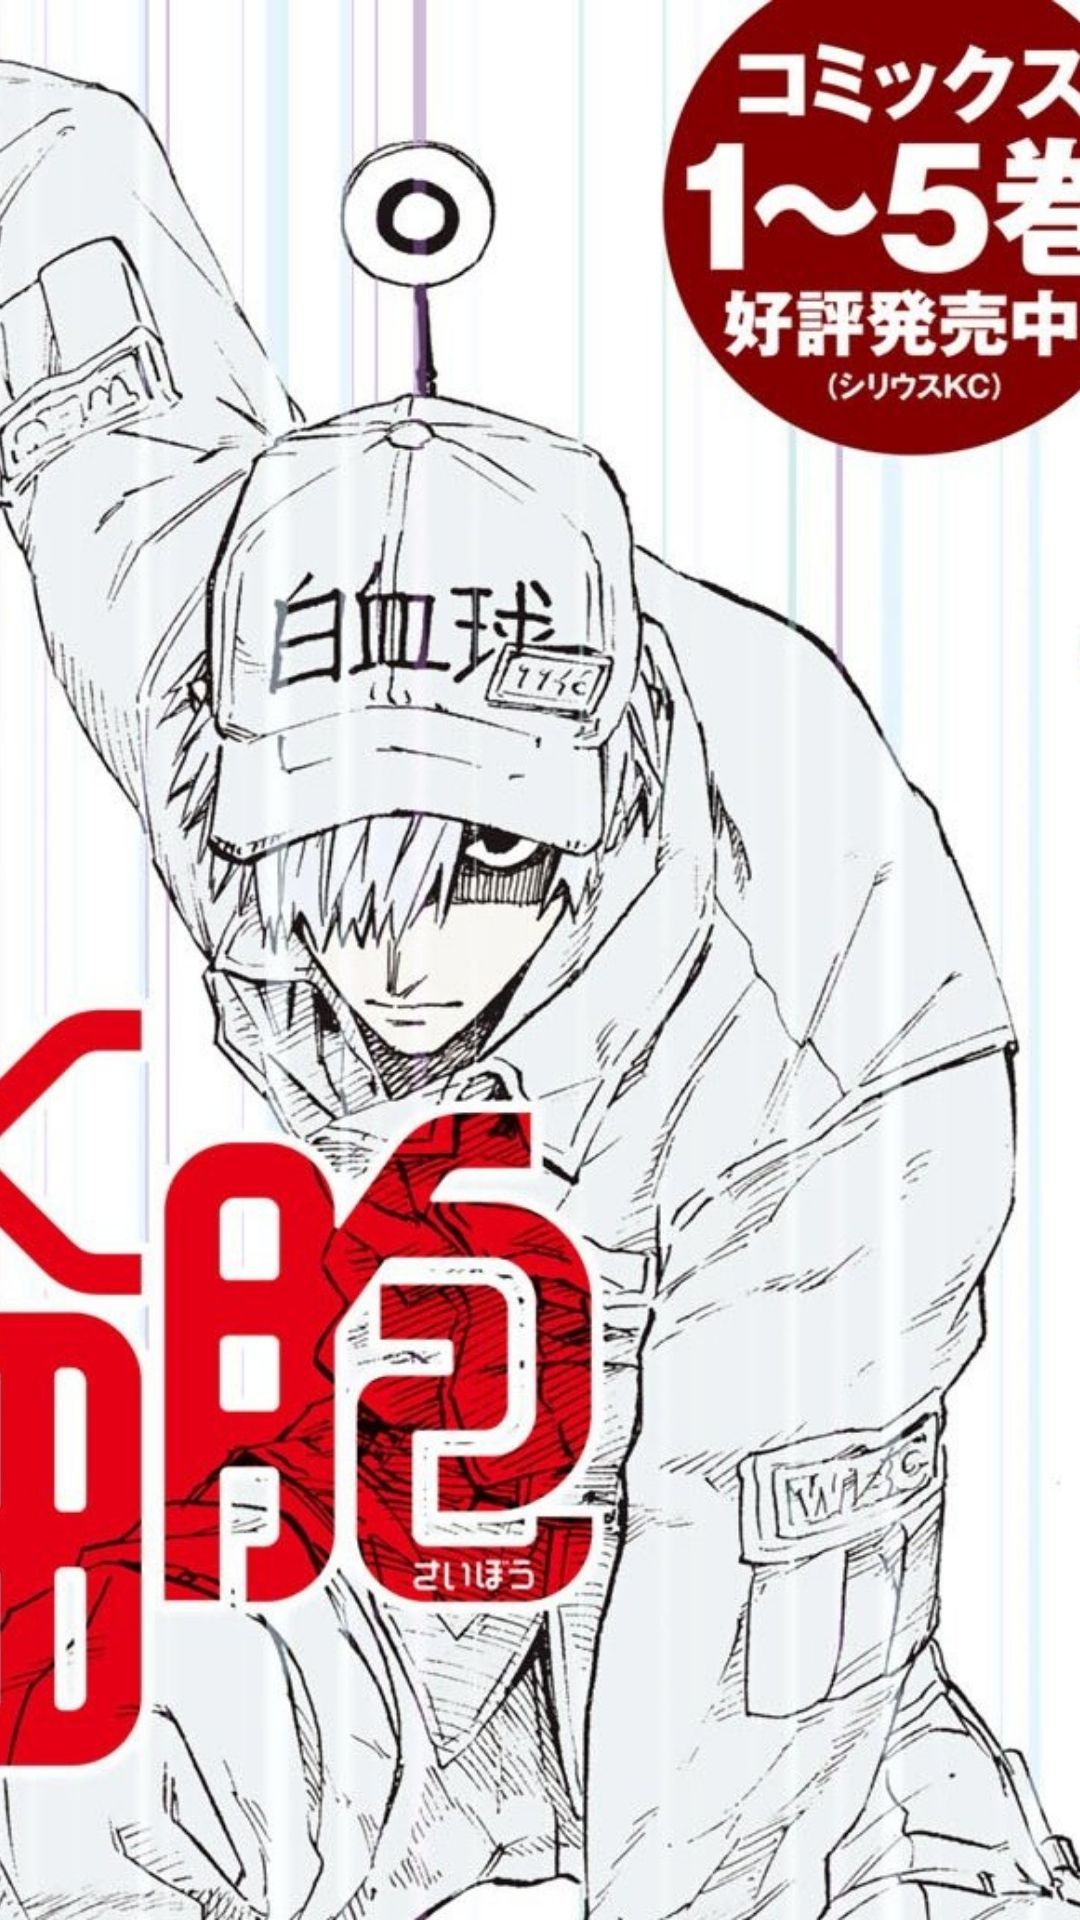 Cells At Work Lady Spinoff Manga Ends Season 1 0962